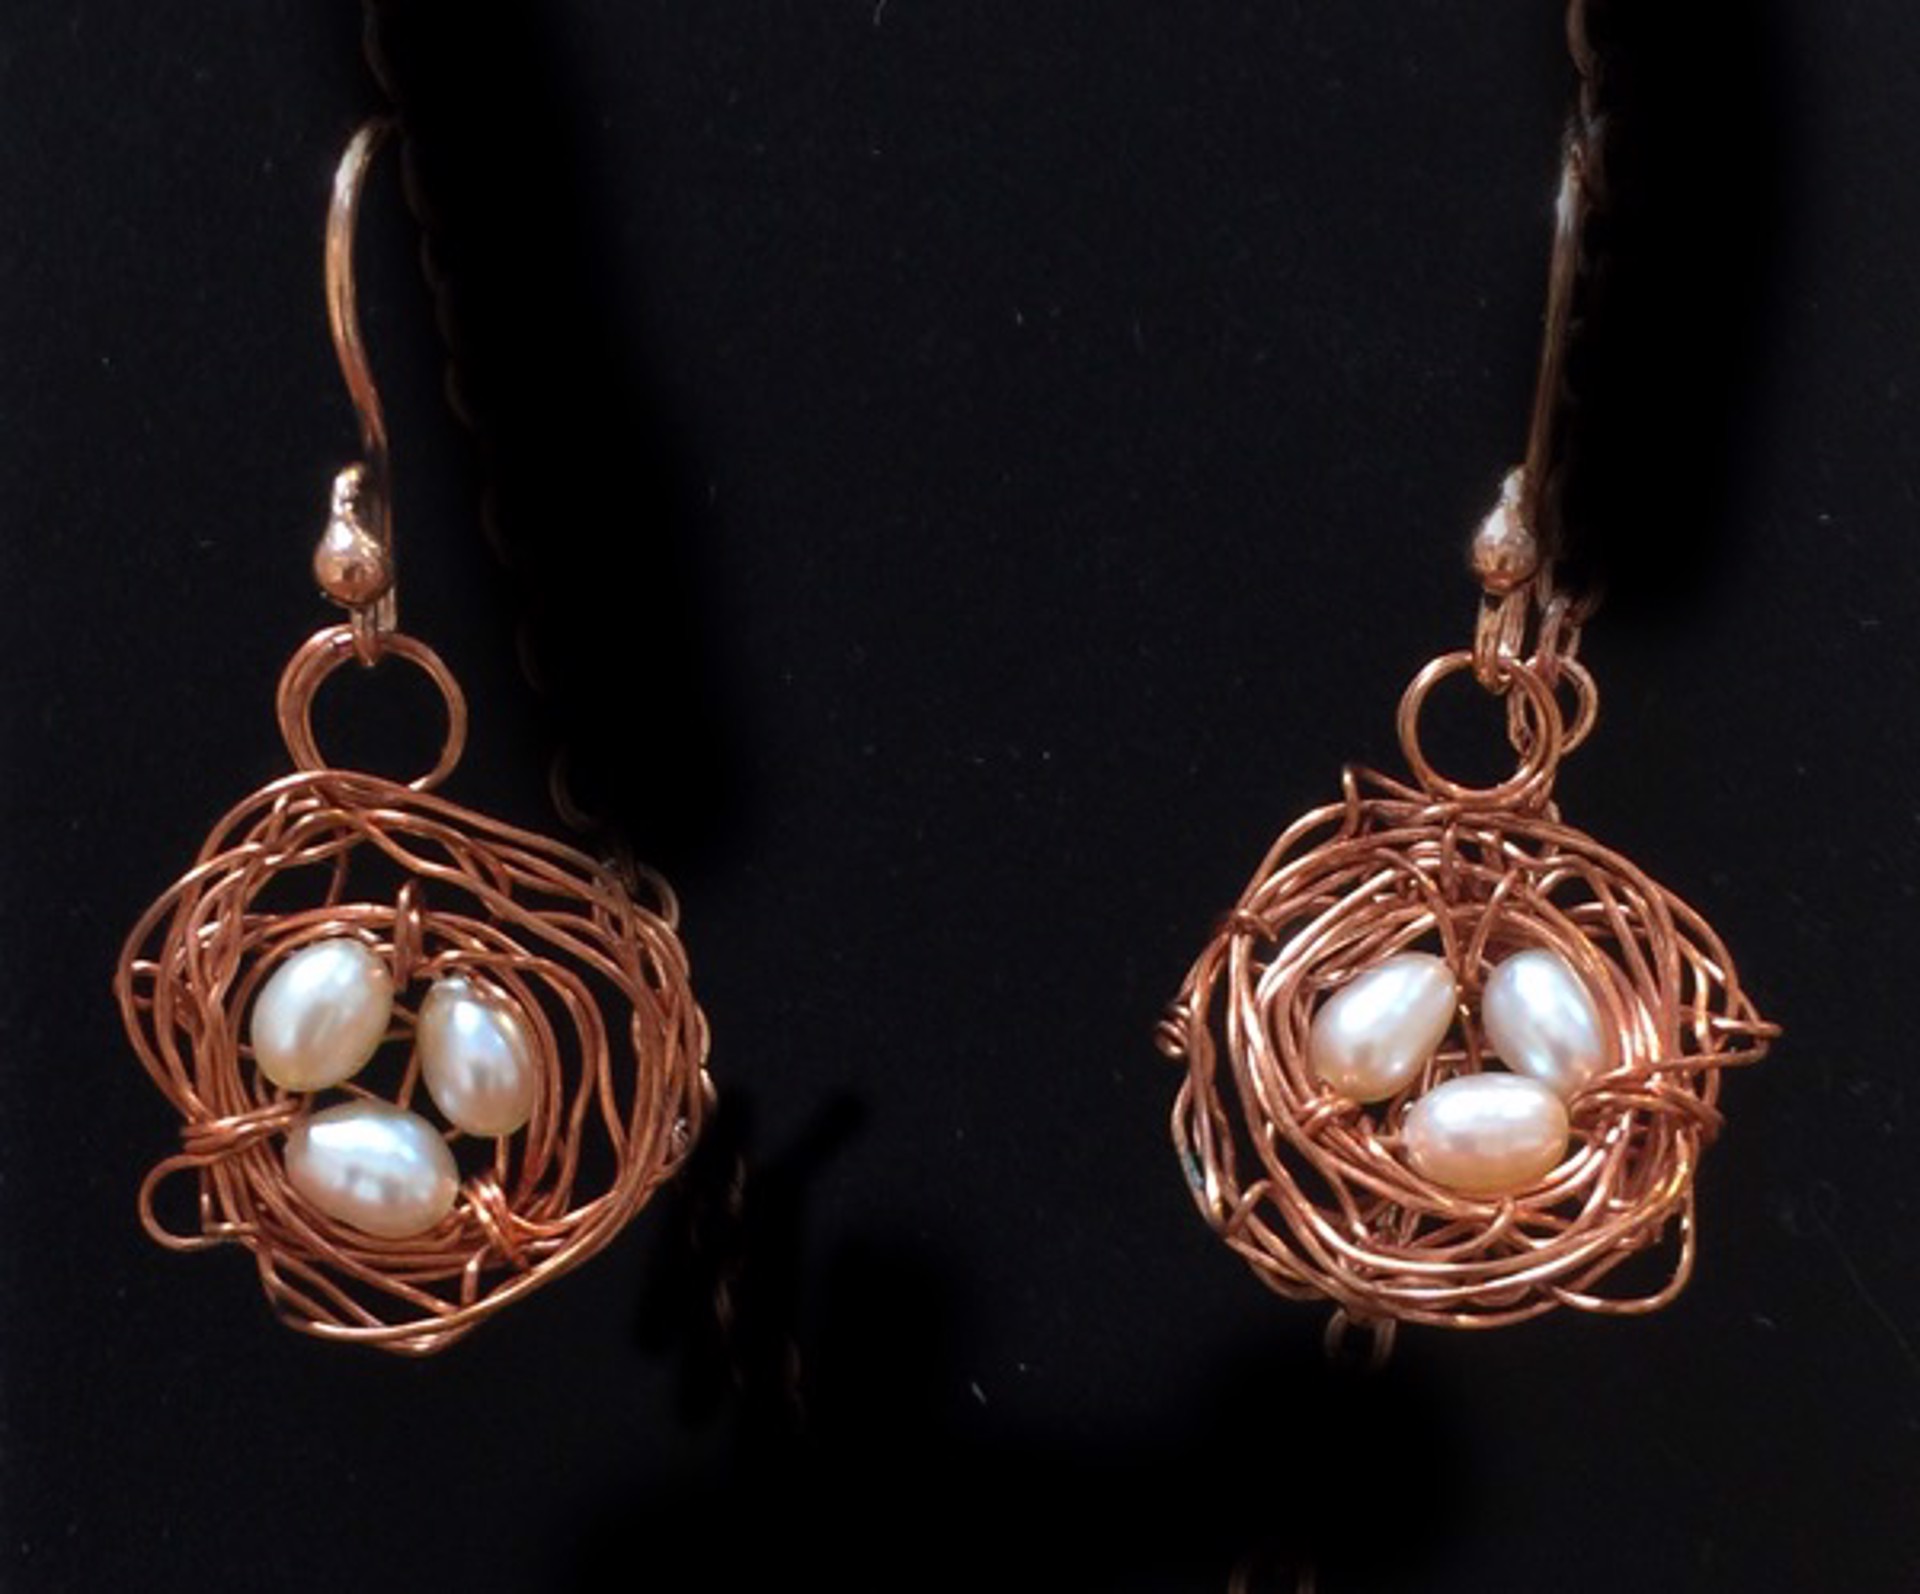 Earrings - Assorted Bird Nests by Indigo Desert Ranch - Jewelry